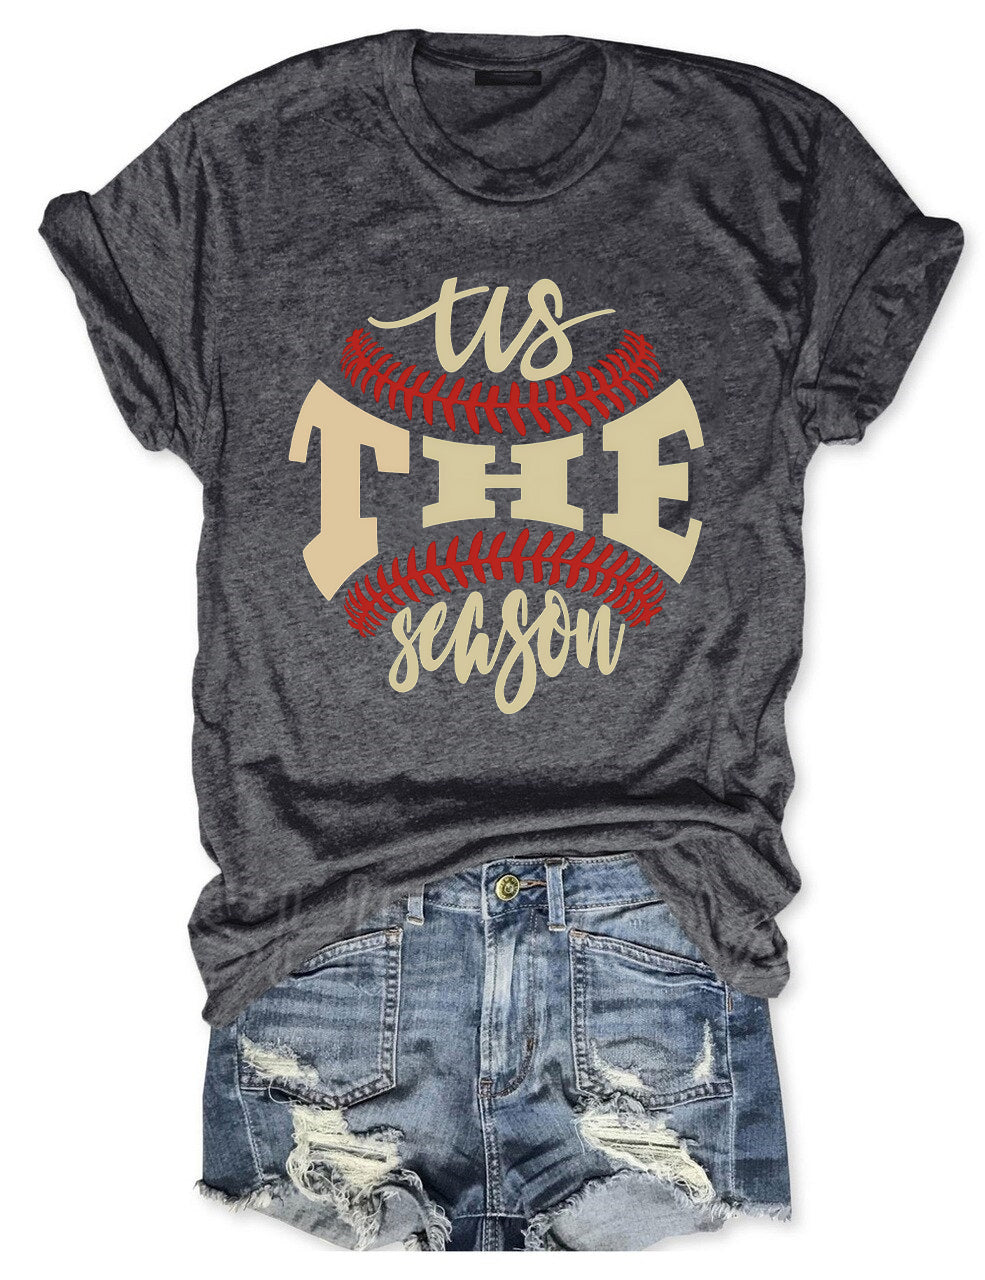 Tis The Season Baseball T-shirt